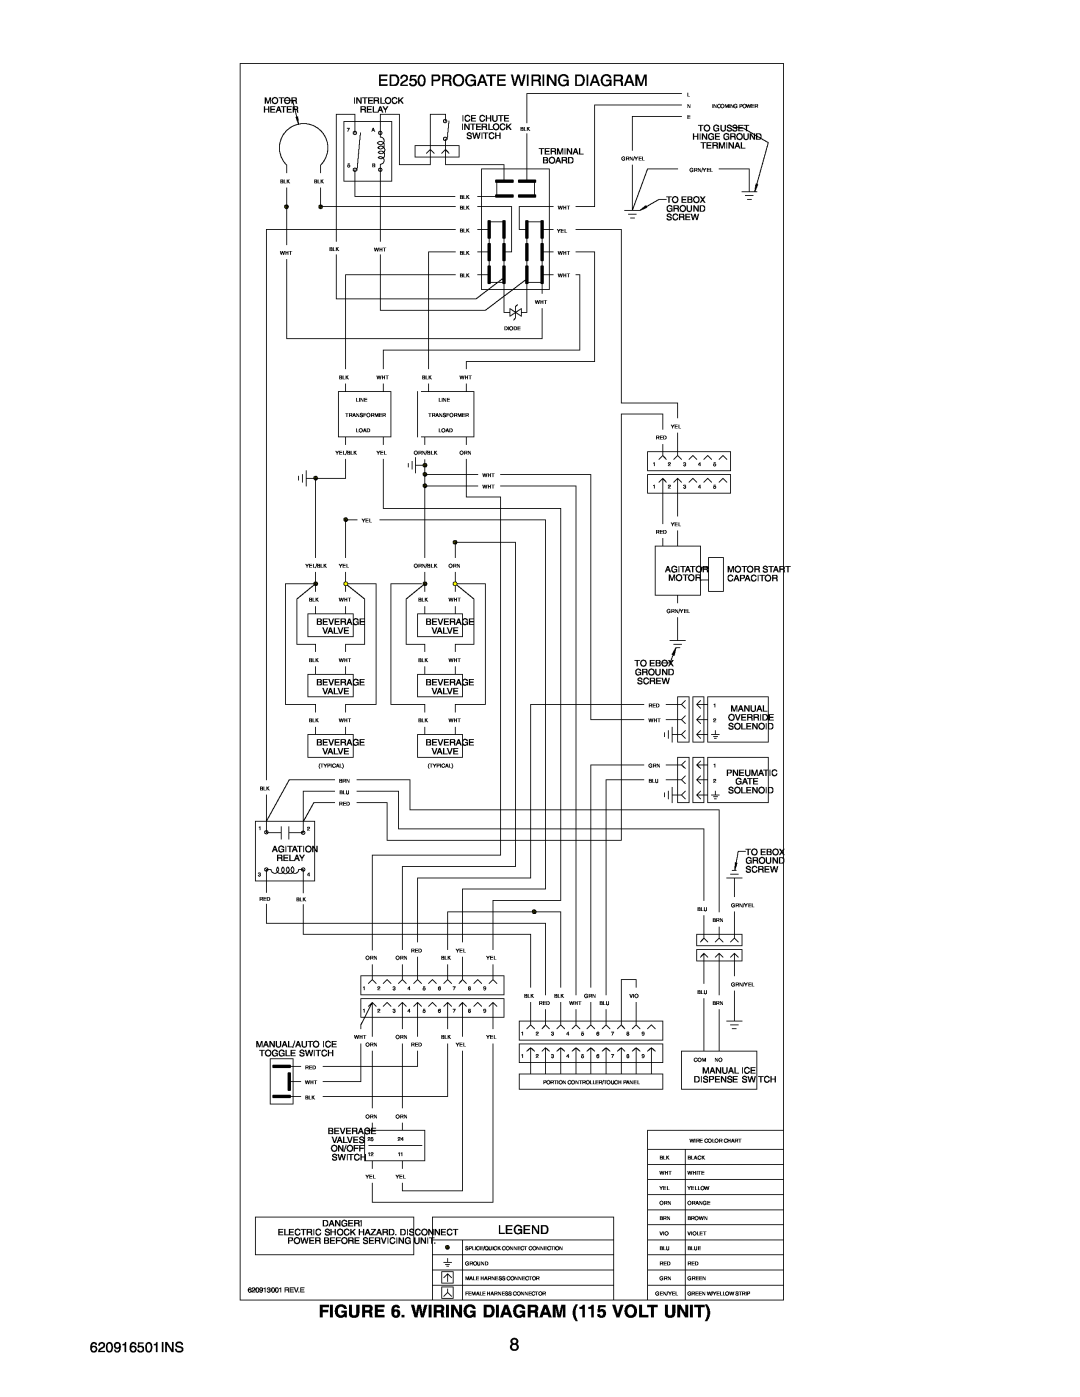 Cornelius ED-250 BCP installation manual WIRING DIAGRAM 115 VOLT UNIT, ED250 PROGATE WIRING DIAGRAM, 620916501INS 